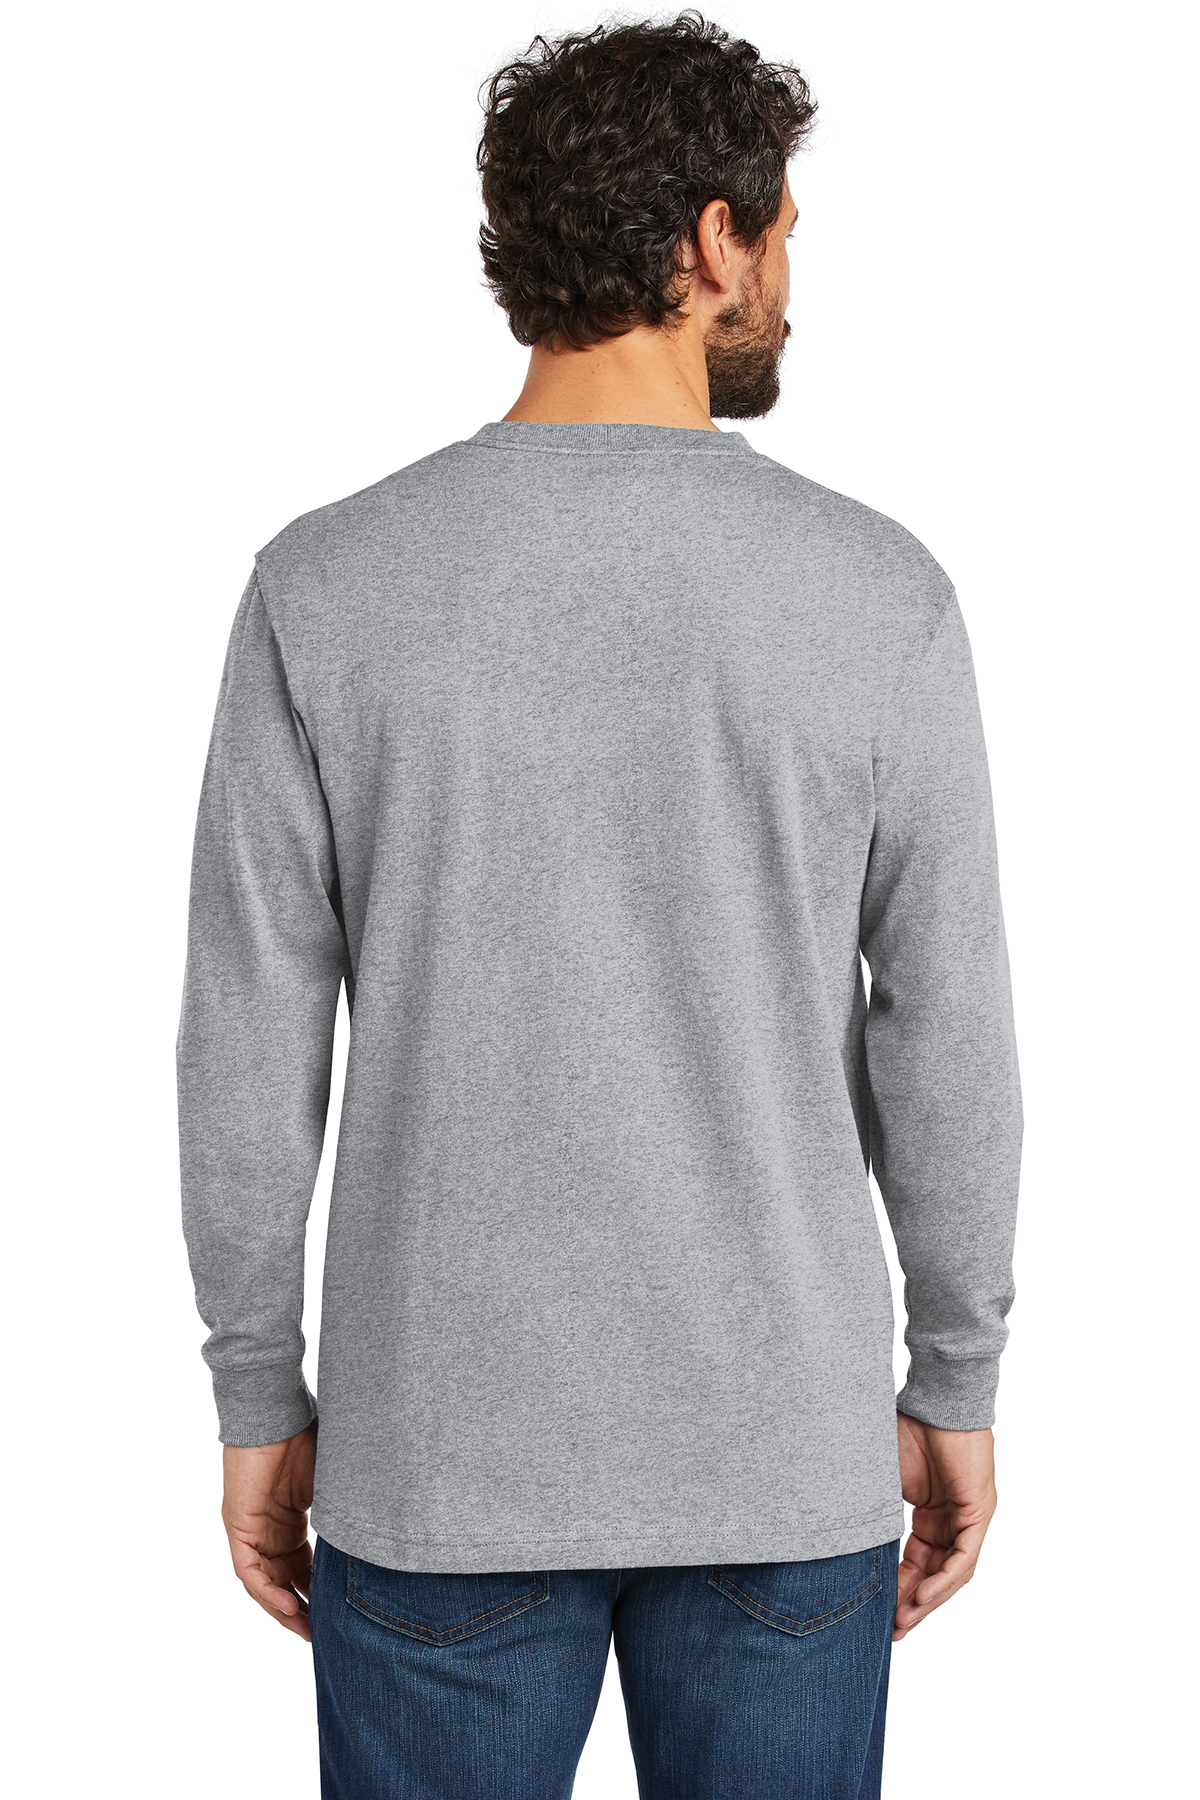 Whalers Long Sleeve T-Shirt - Cummings & Good